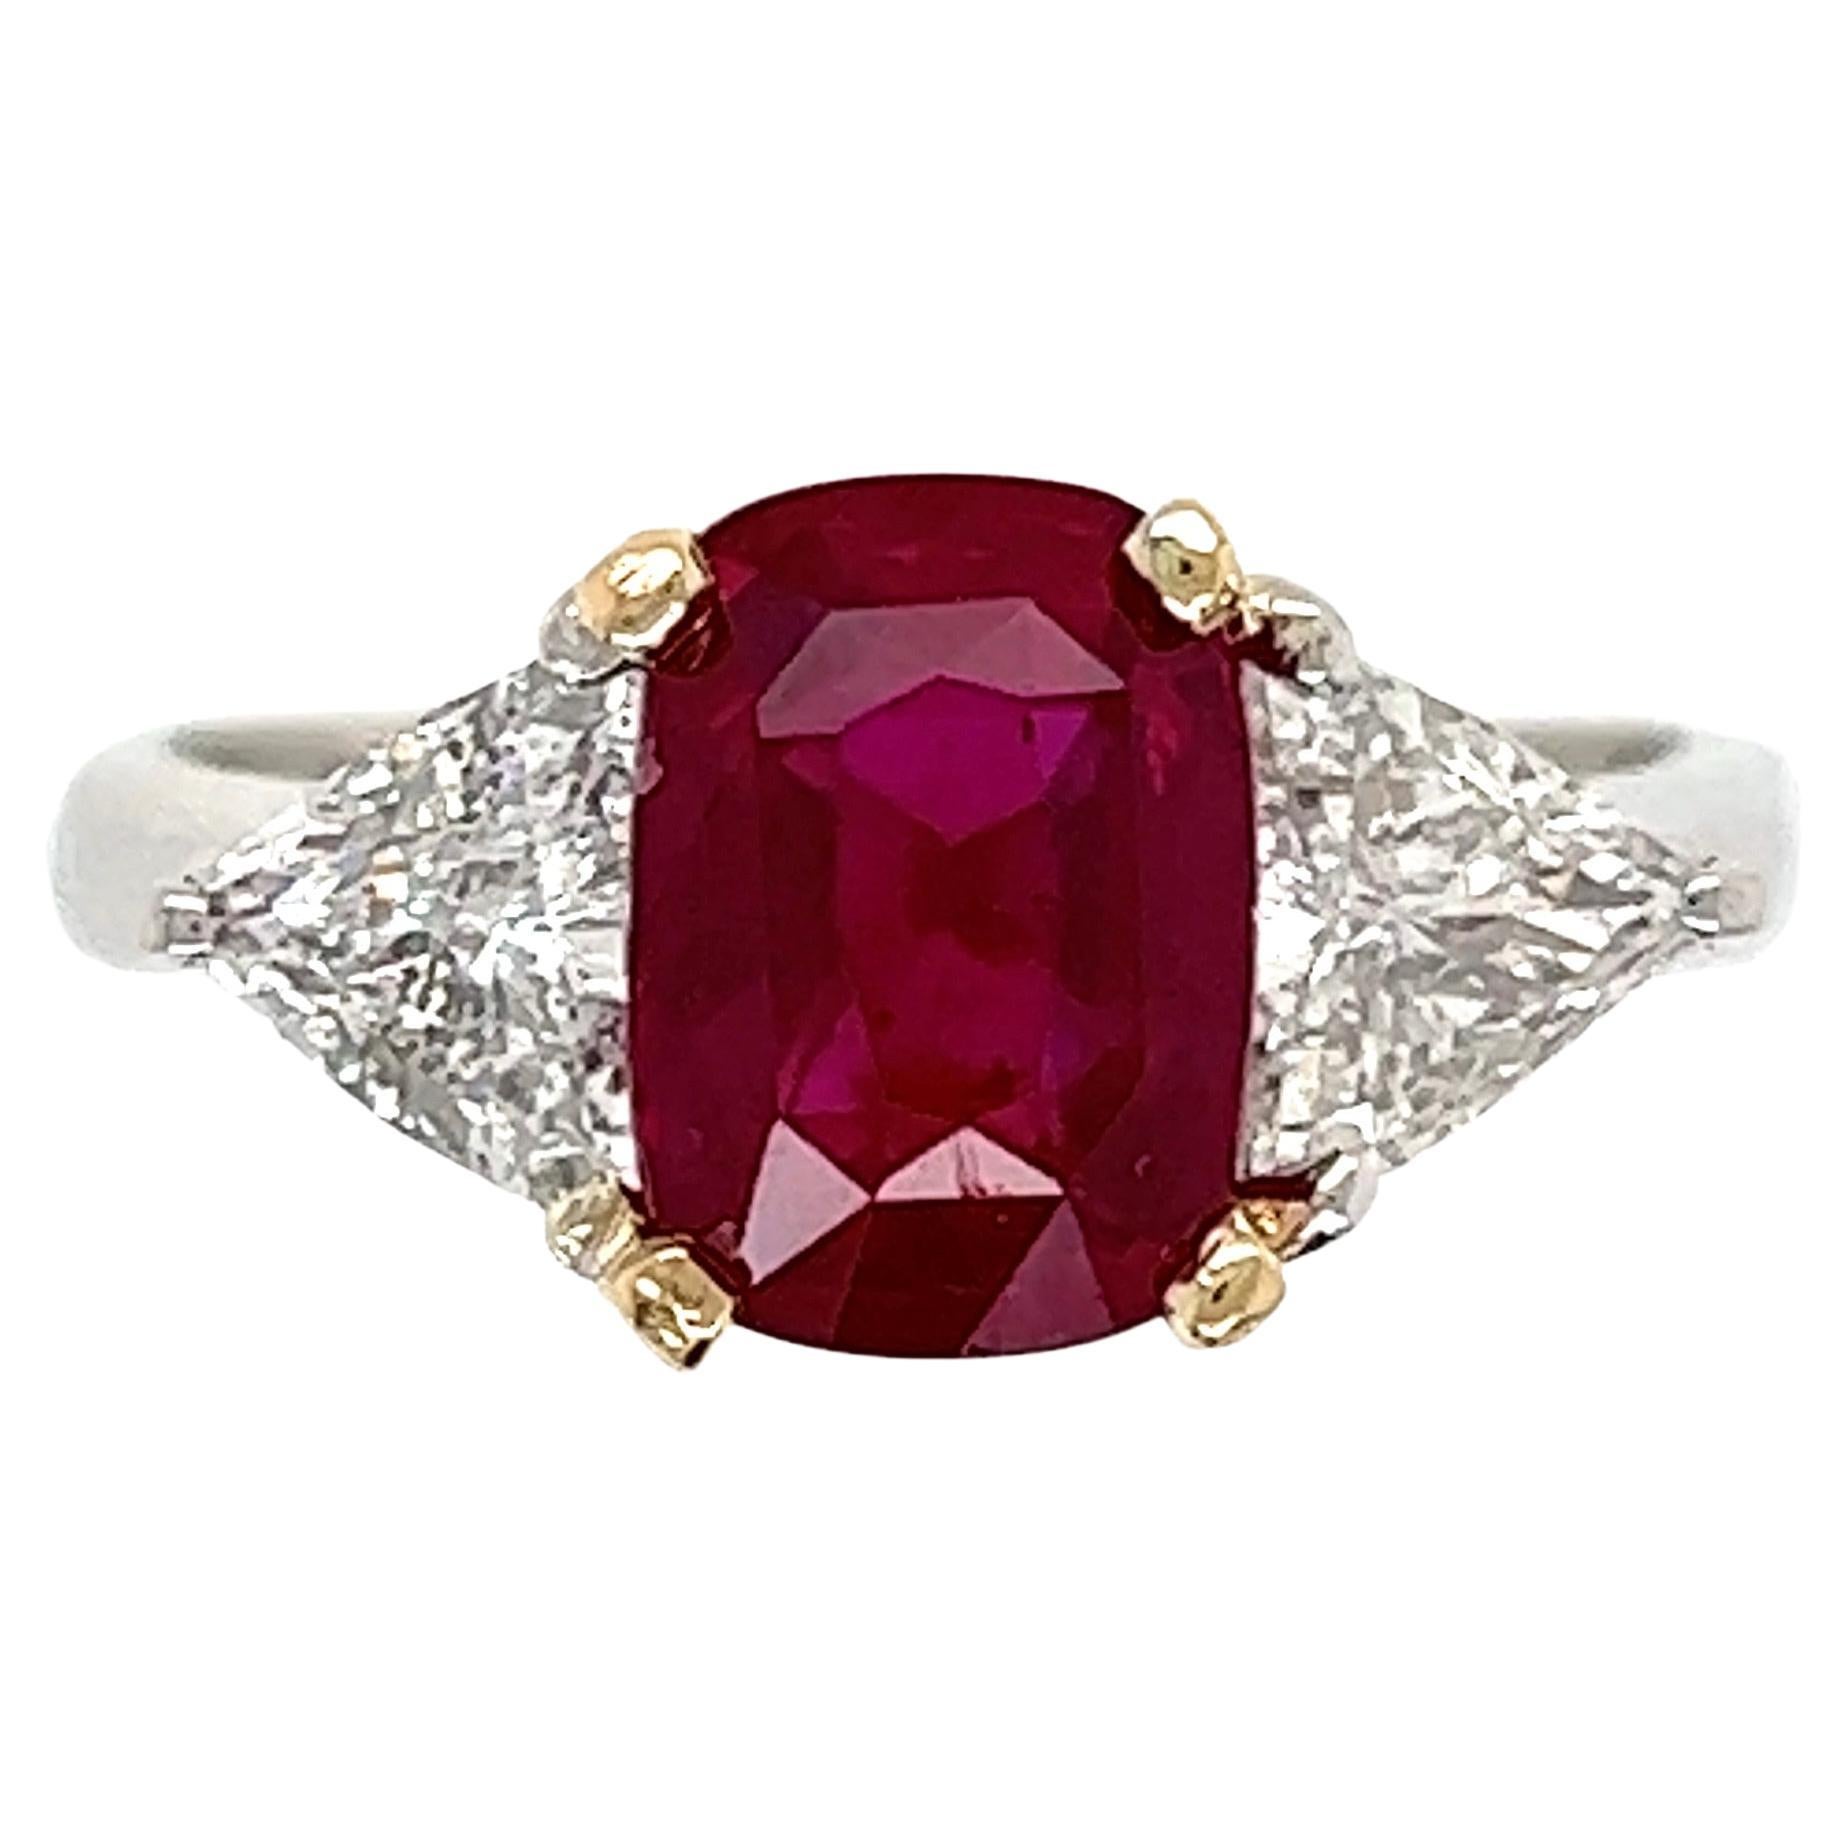 2.80 Carat Ruby GIA and Trillion Diamond 3-Stone Gold Ring Estate Fine Jewelry